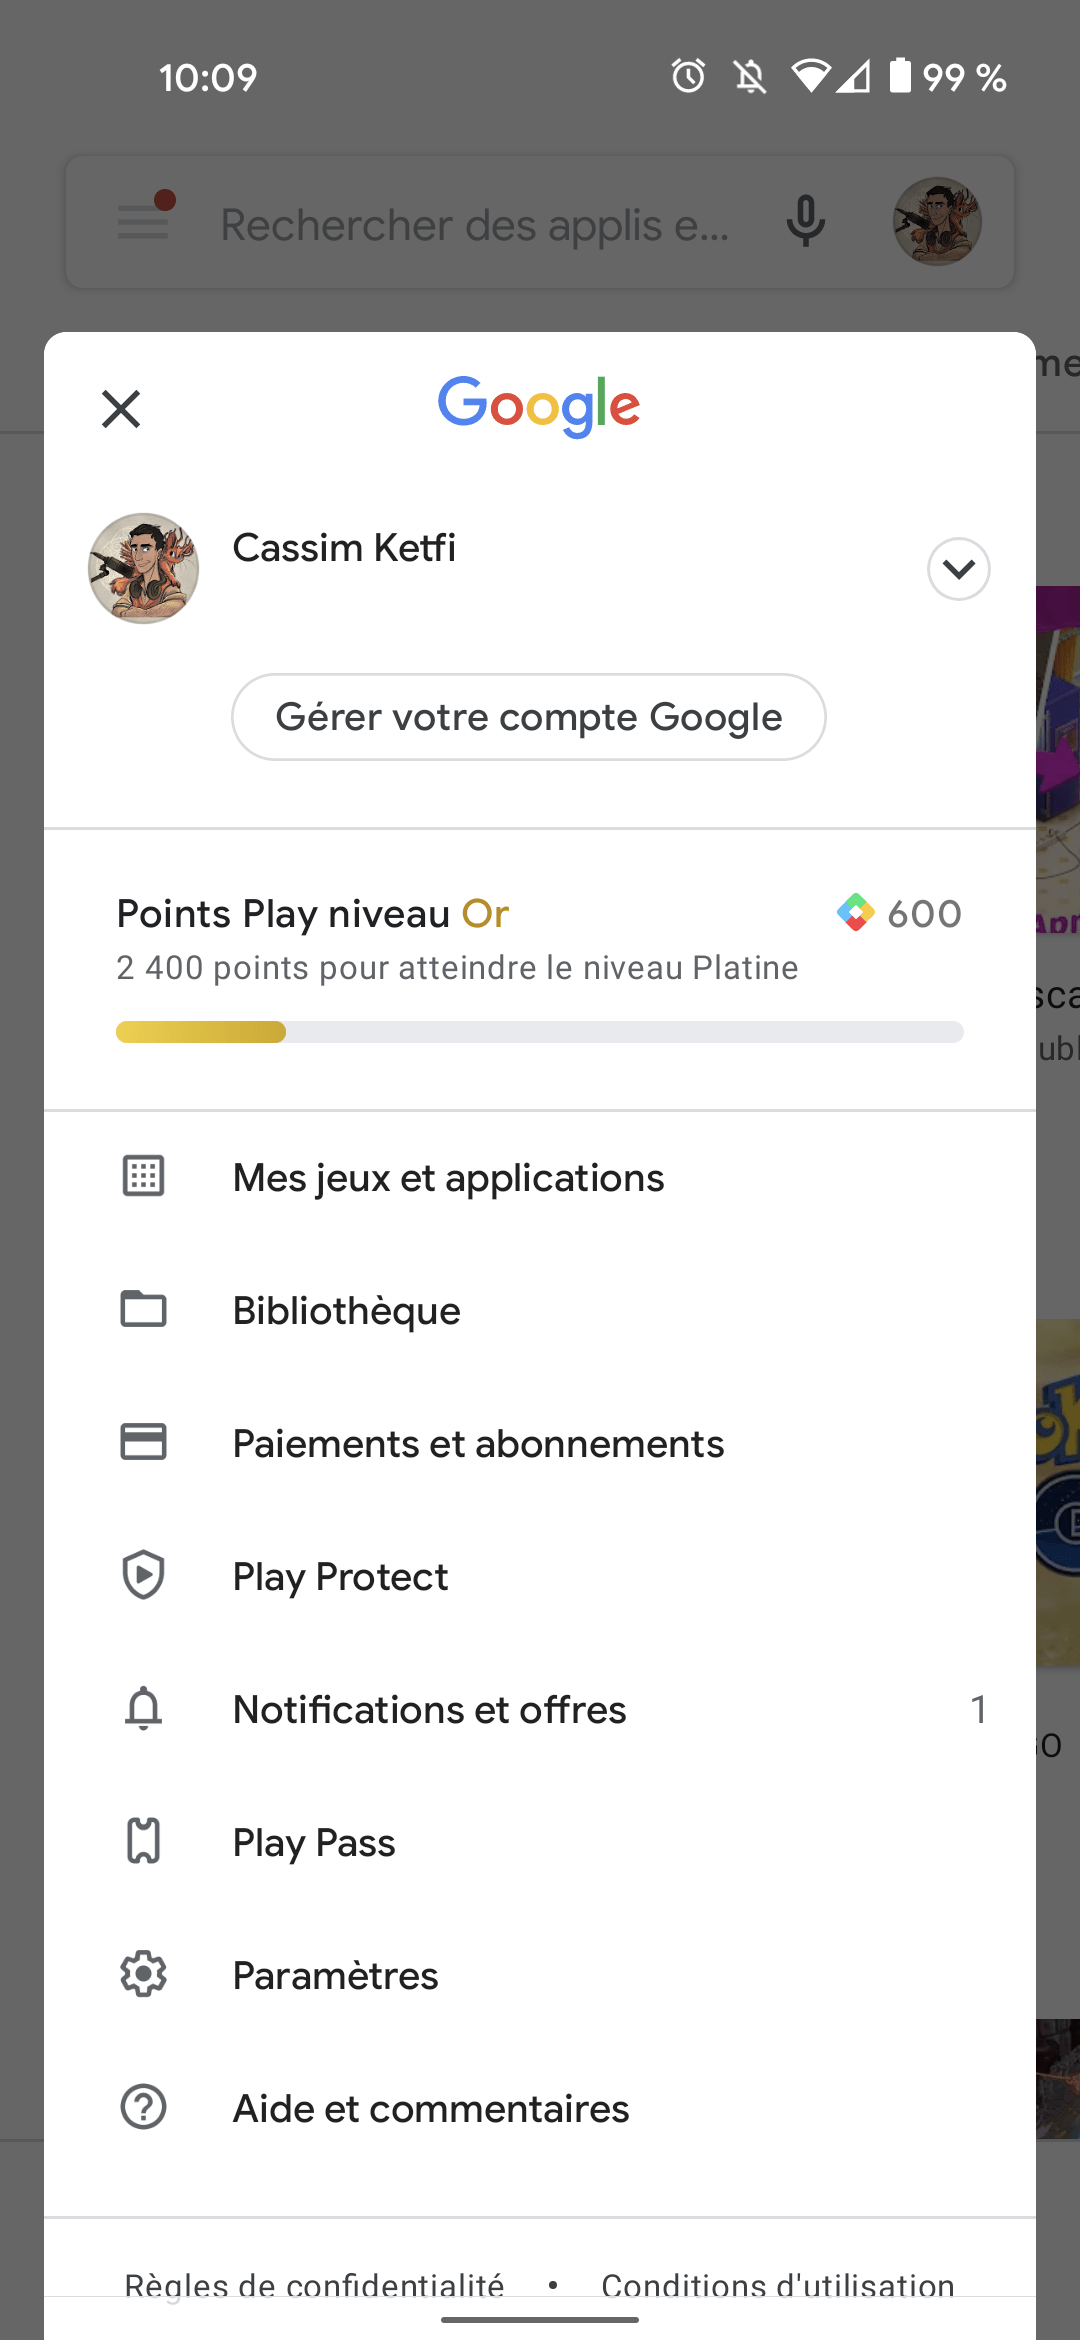 Google Play Store update avril 2021 (1)